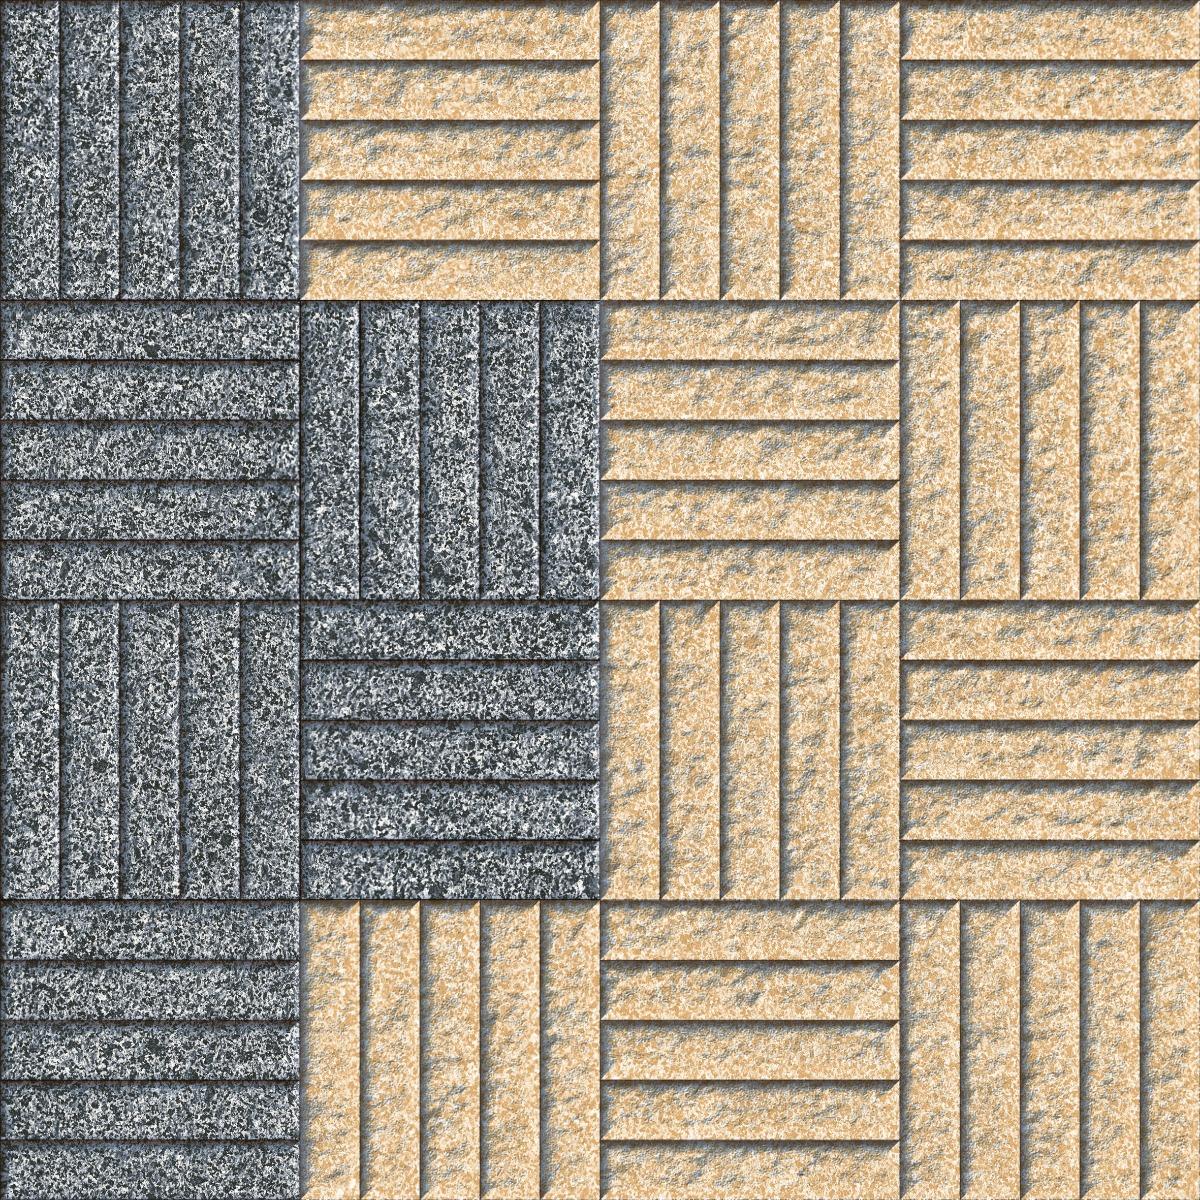 Grey Tiles for Commercial Tiles, Parking Tiles, Office Tiles, Pathway Tiles, Hospital Tiles, High Traffic Tiles, Bar/Restaurant, Outdoor Area, Porch/Parking